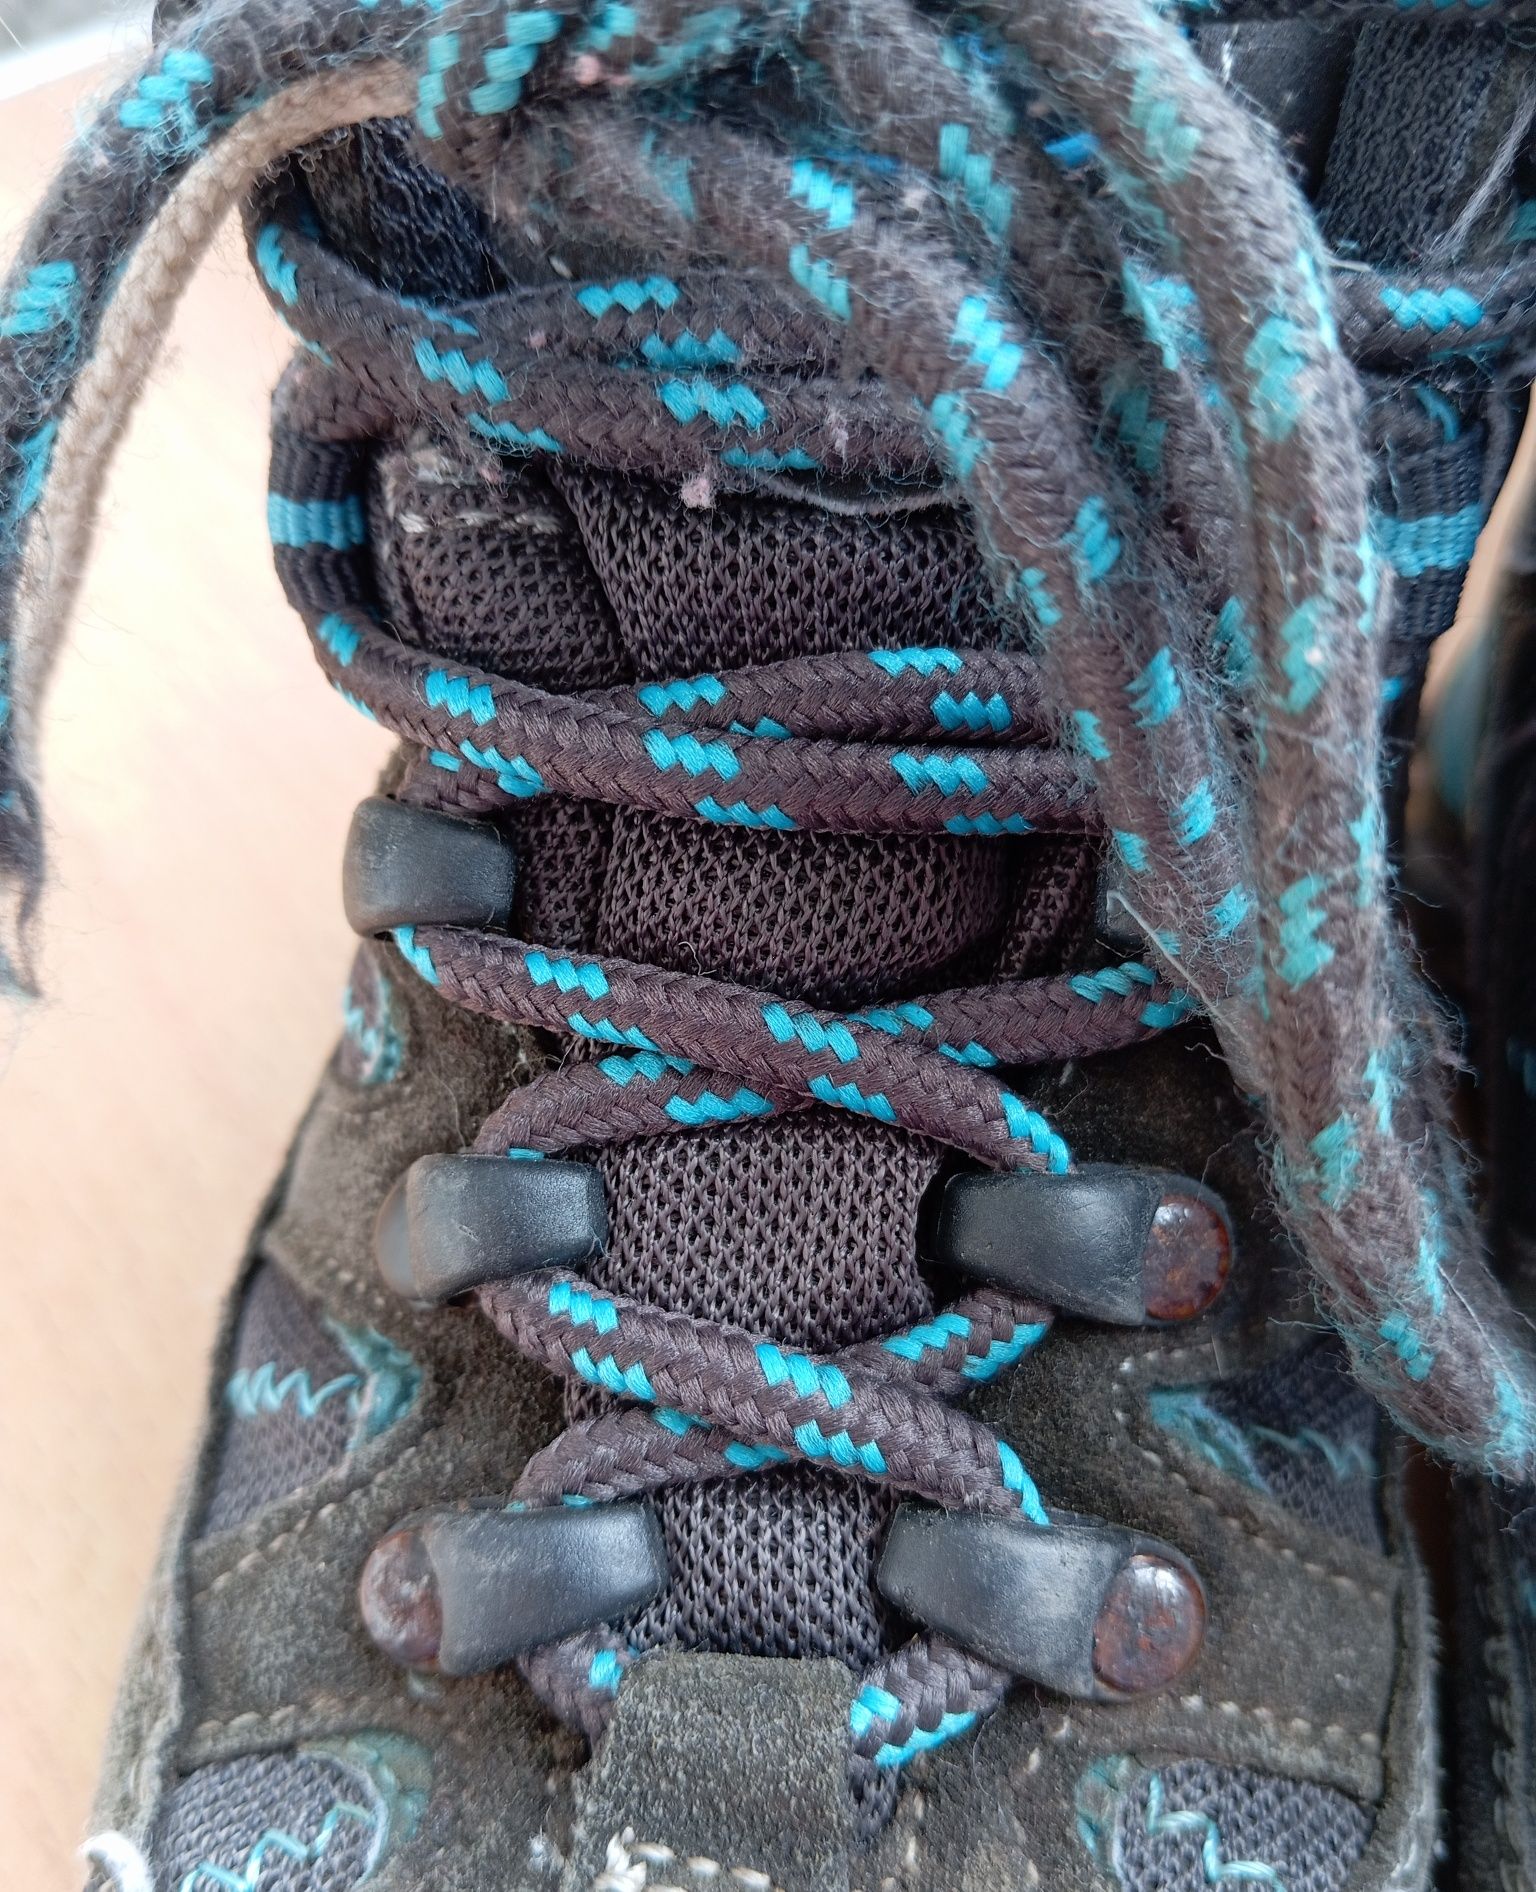 Термо ботинки сапоги mountain